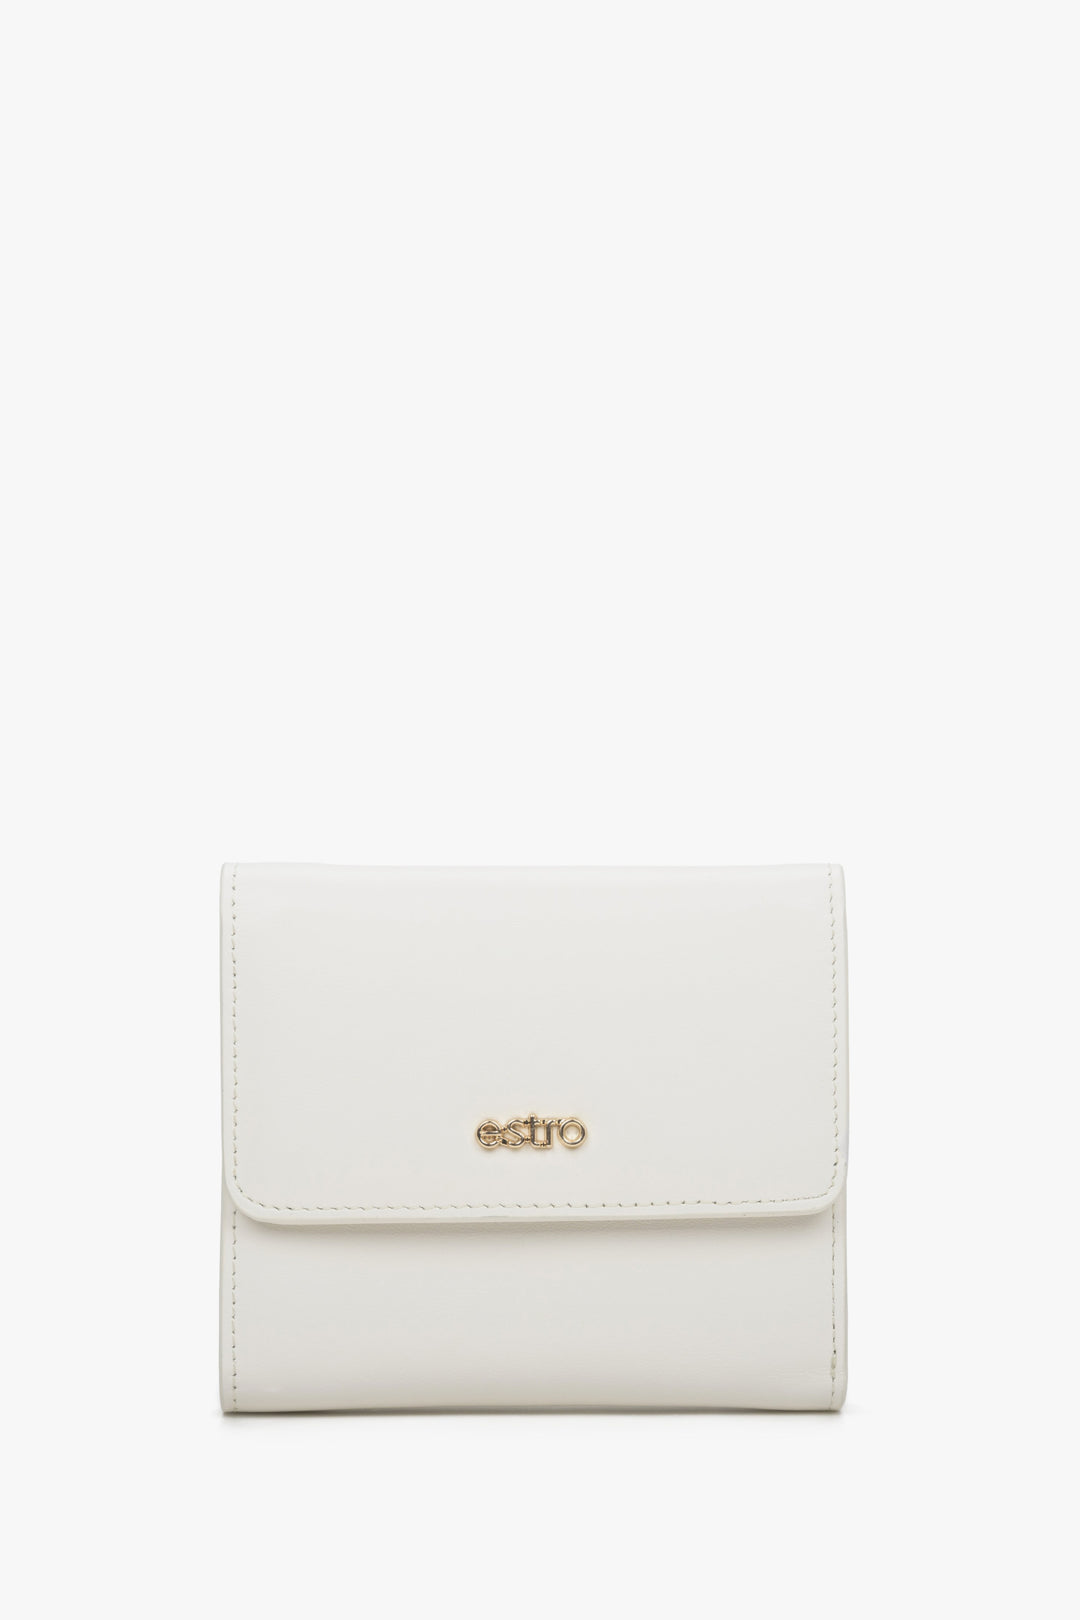 Women's Small Tri-Fold Light Beige Wallet made of Genuine Leather Estro ER00114488.